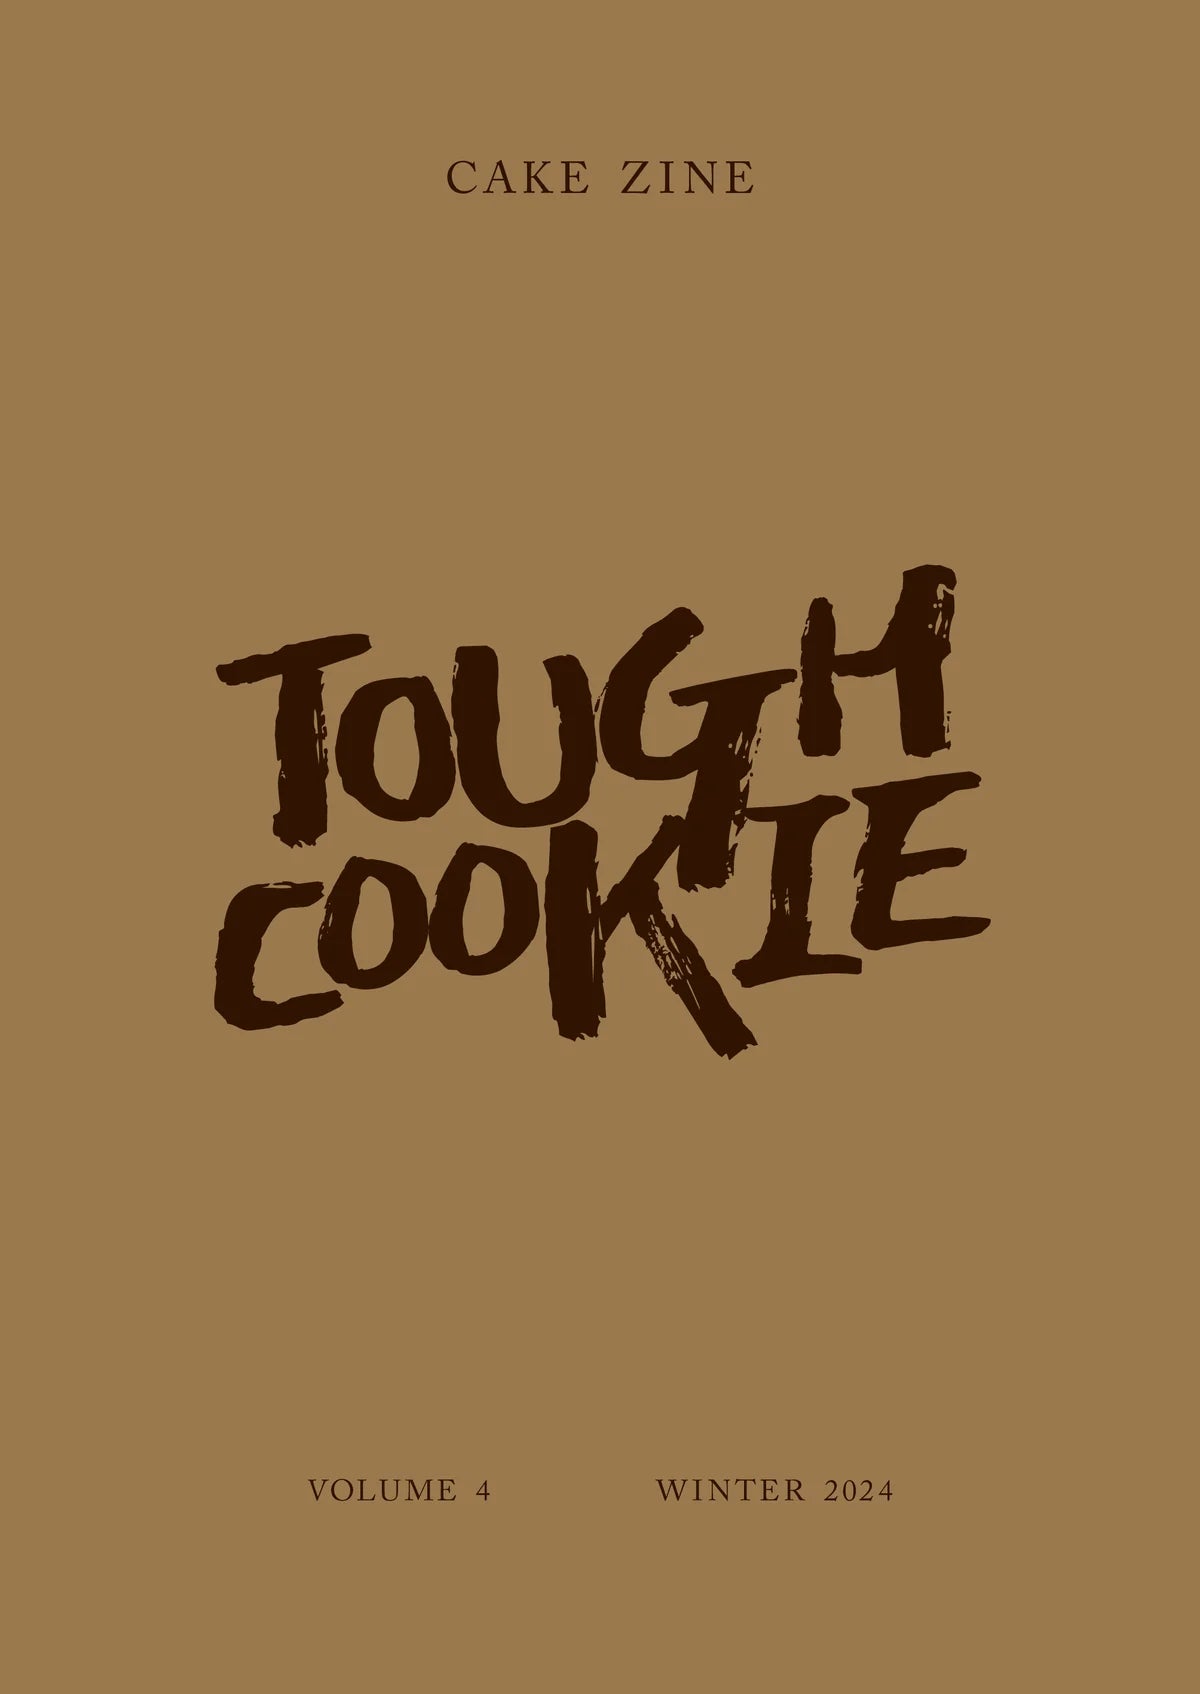 Cake Zine Volume 4: Tough Cookie